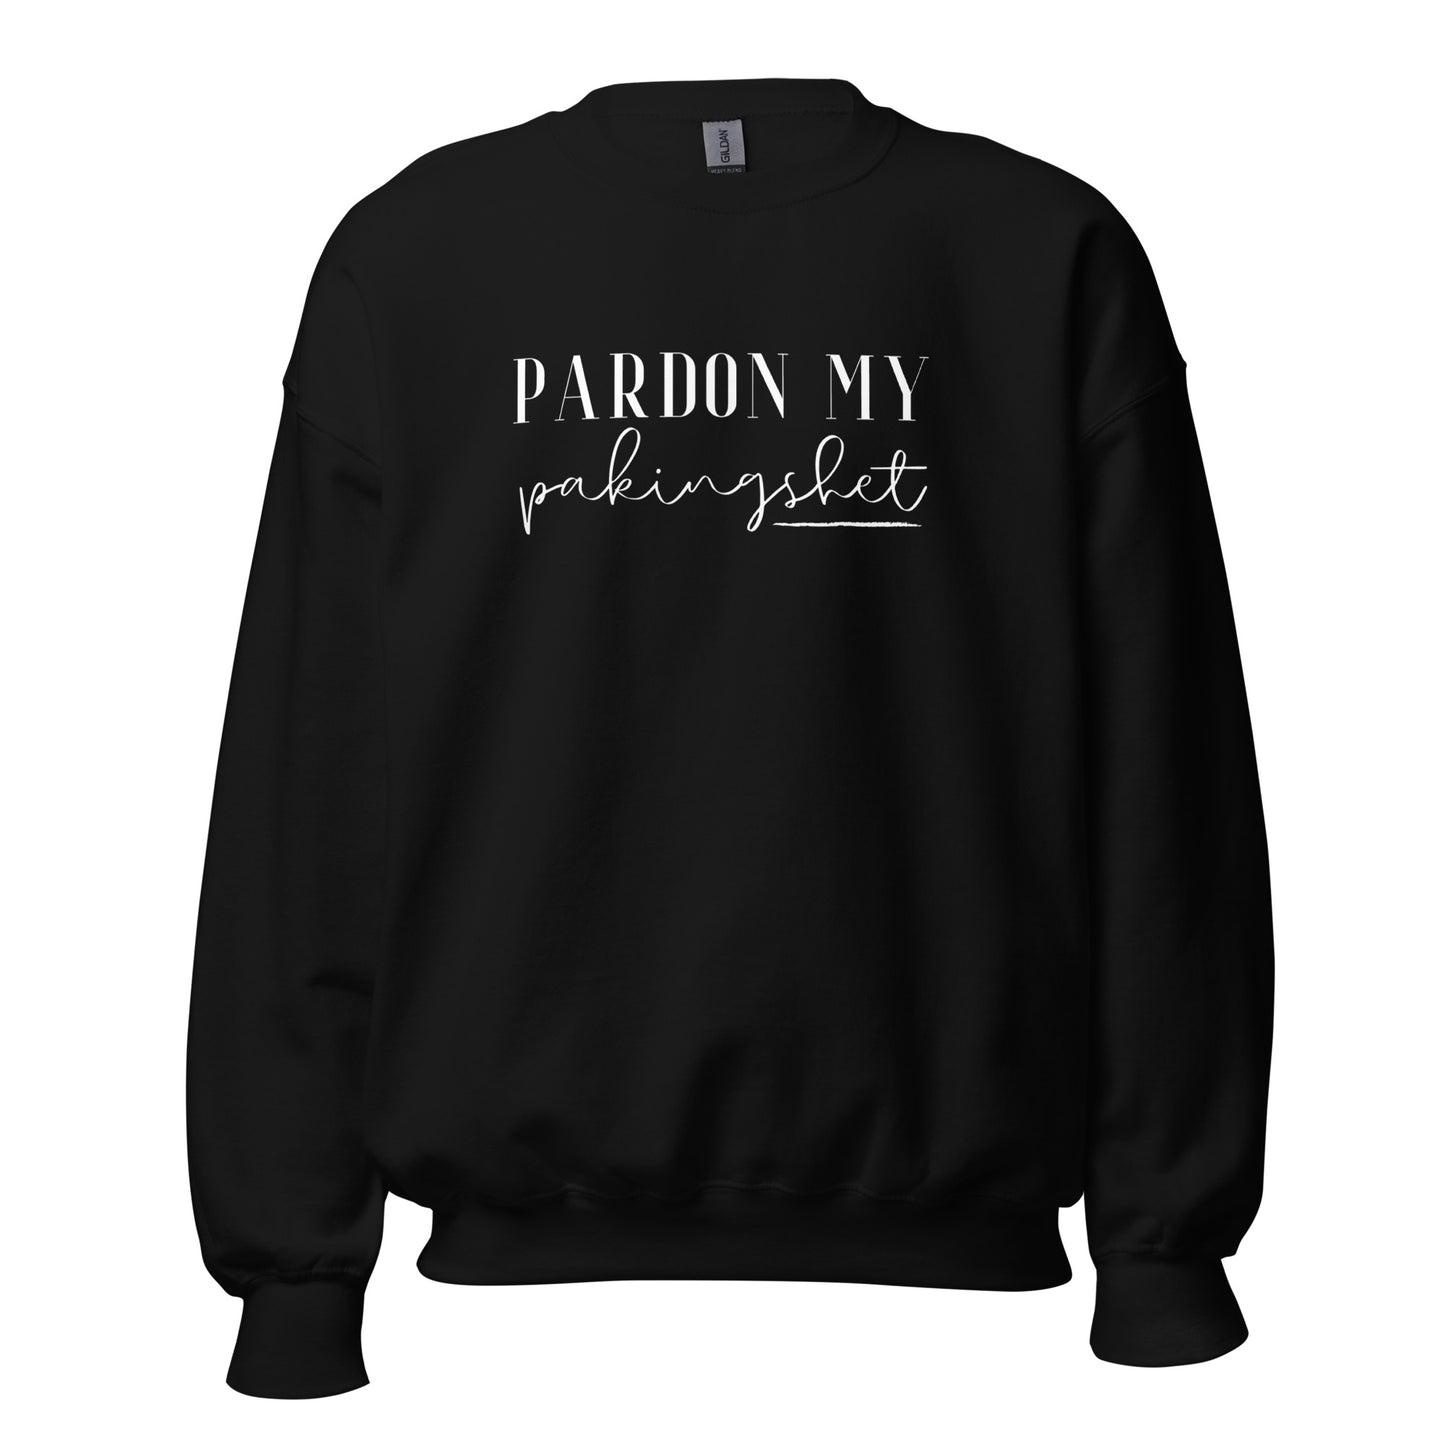 Filipino Sweatshirt Crew Neck Pardon My Pakingshet Funny Merch in color variant Black